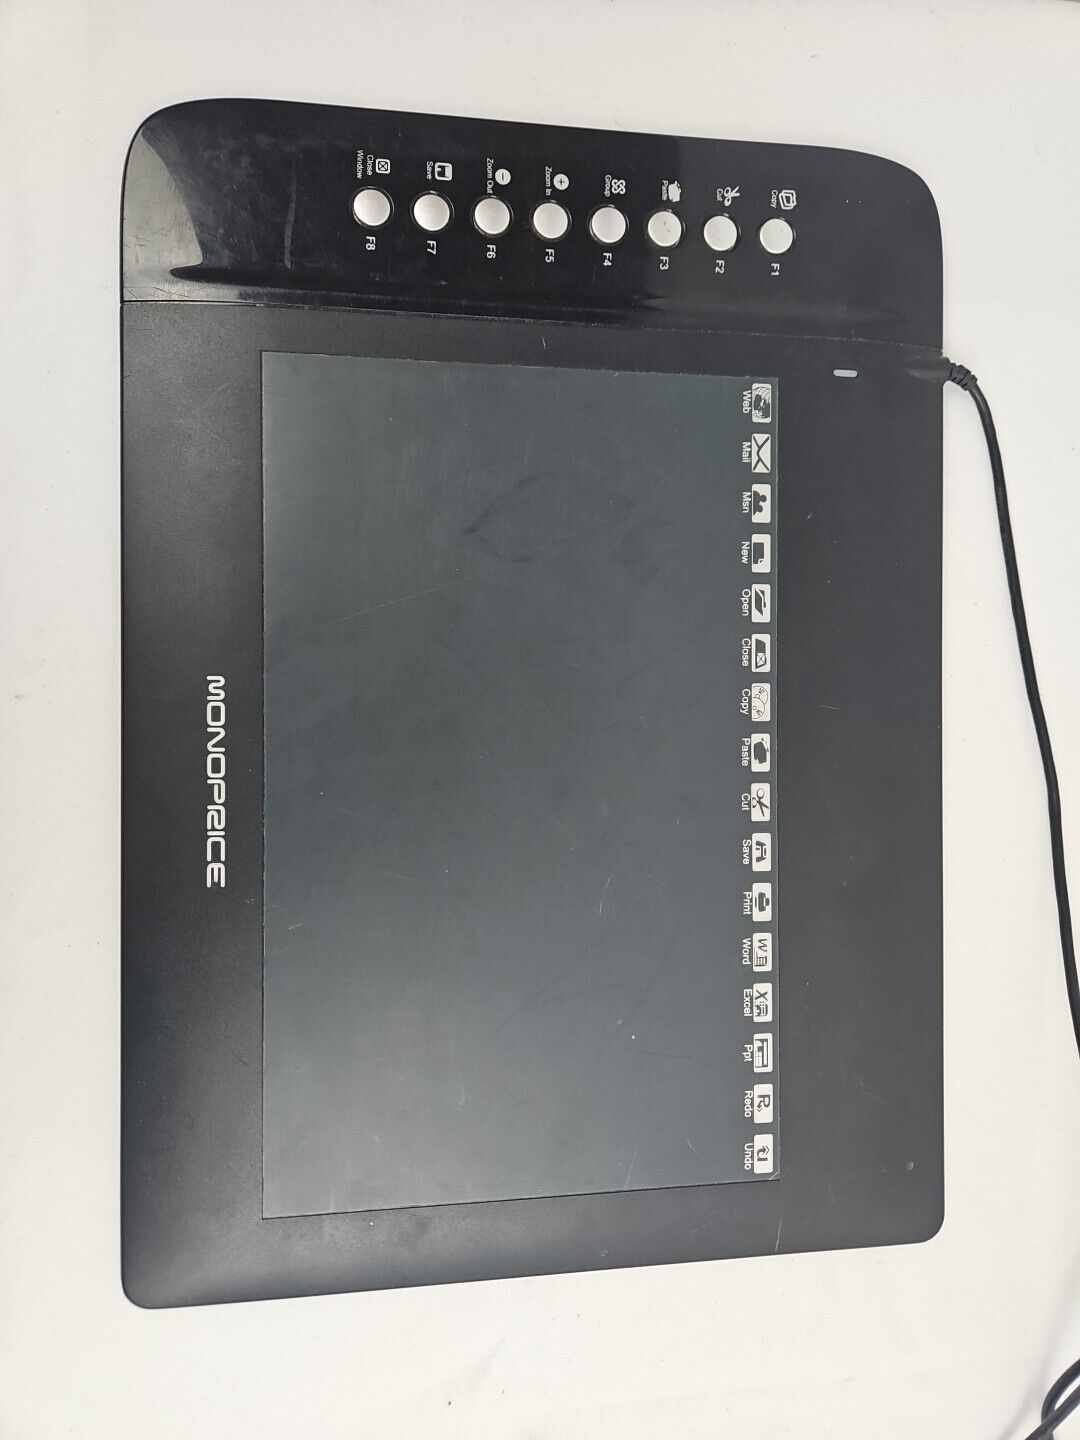 Monoprice Graphic Drawing Tablet MP1060-HA60 - No Box, No Pen, No CD